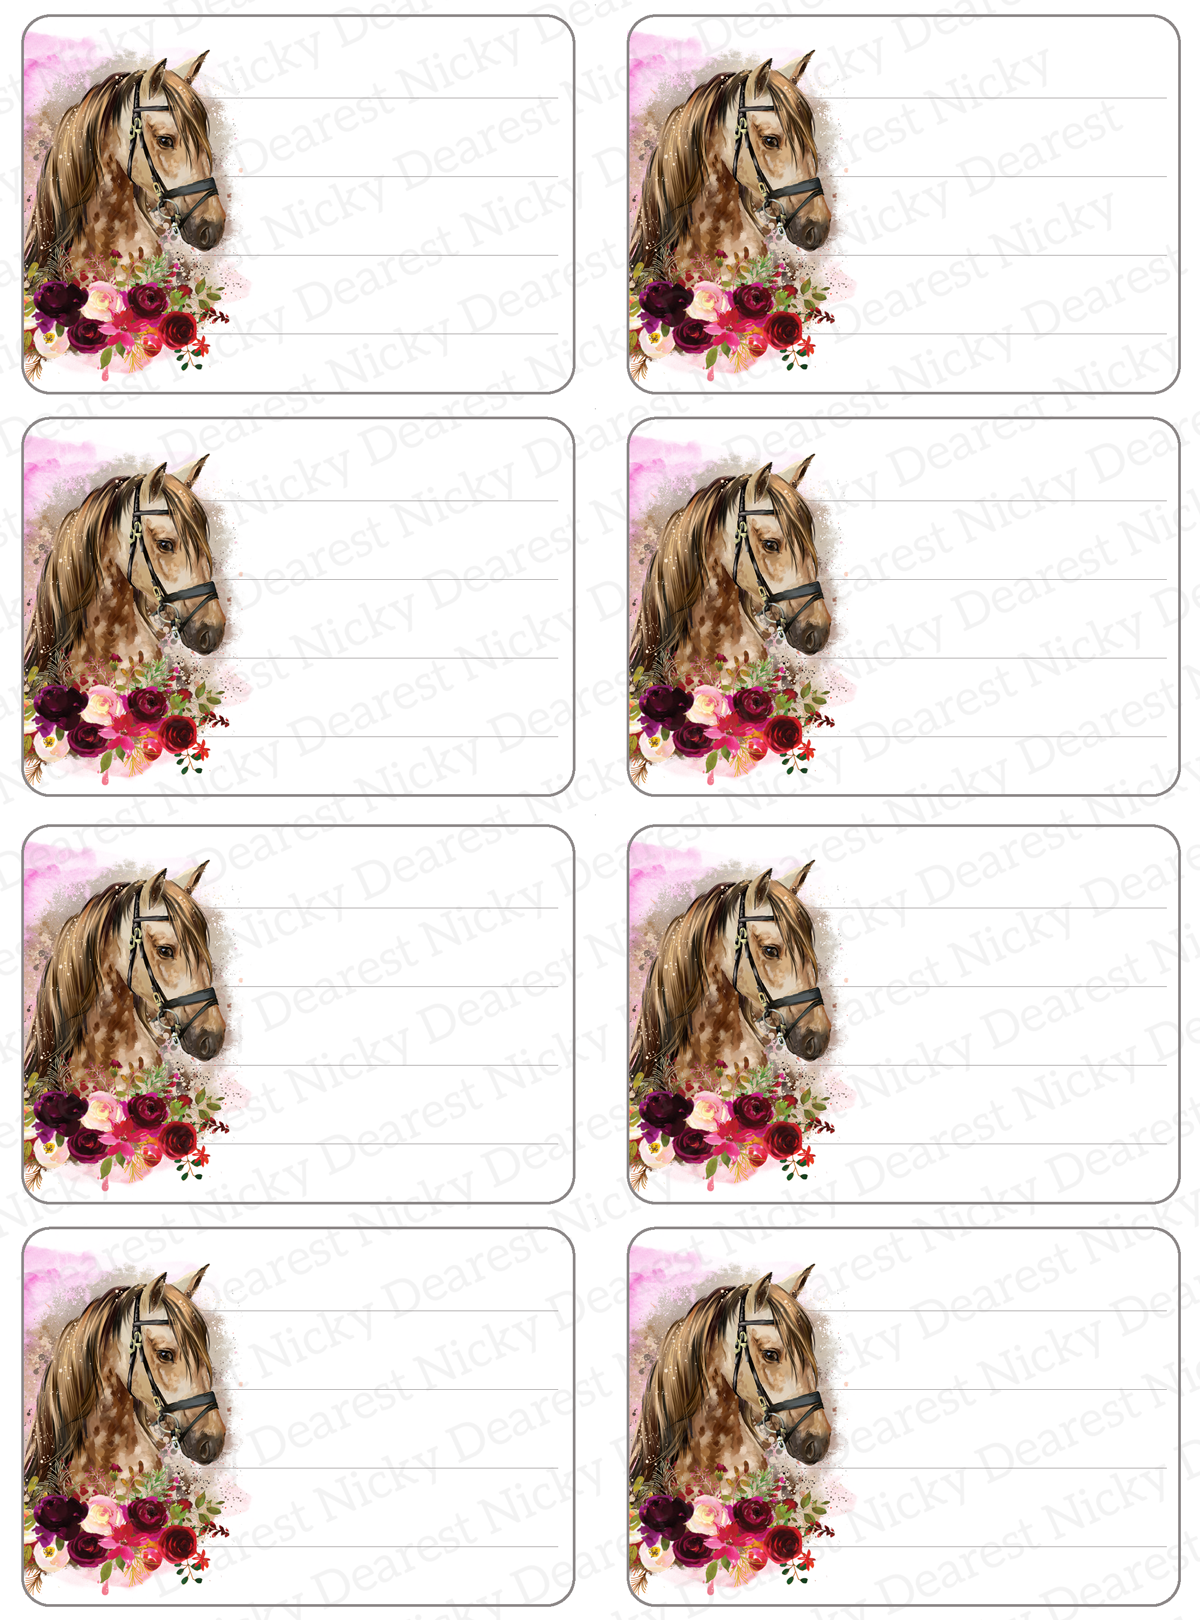 Horse Mailing Address Labels - Set of 16